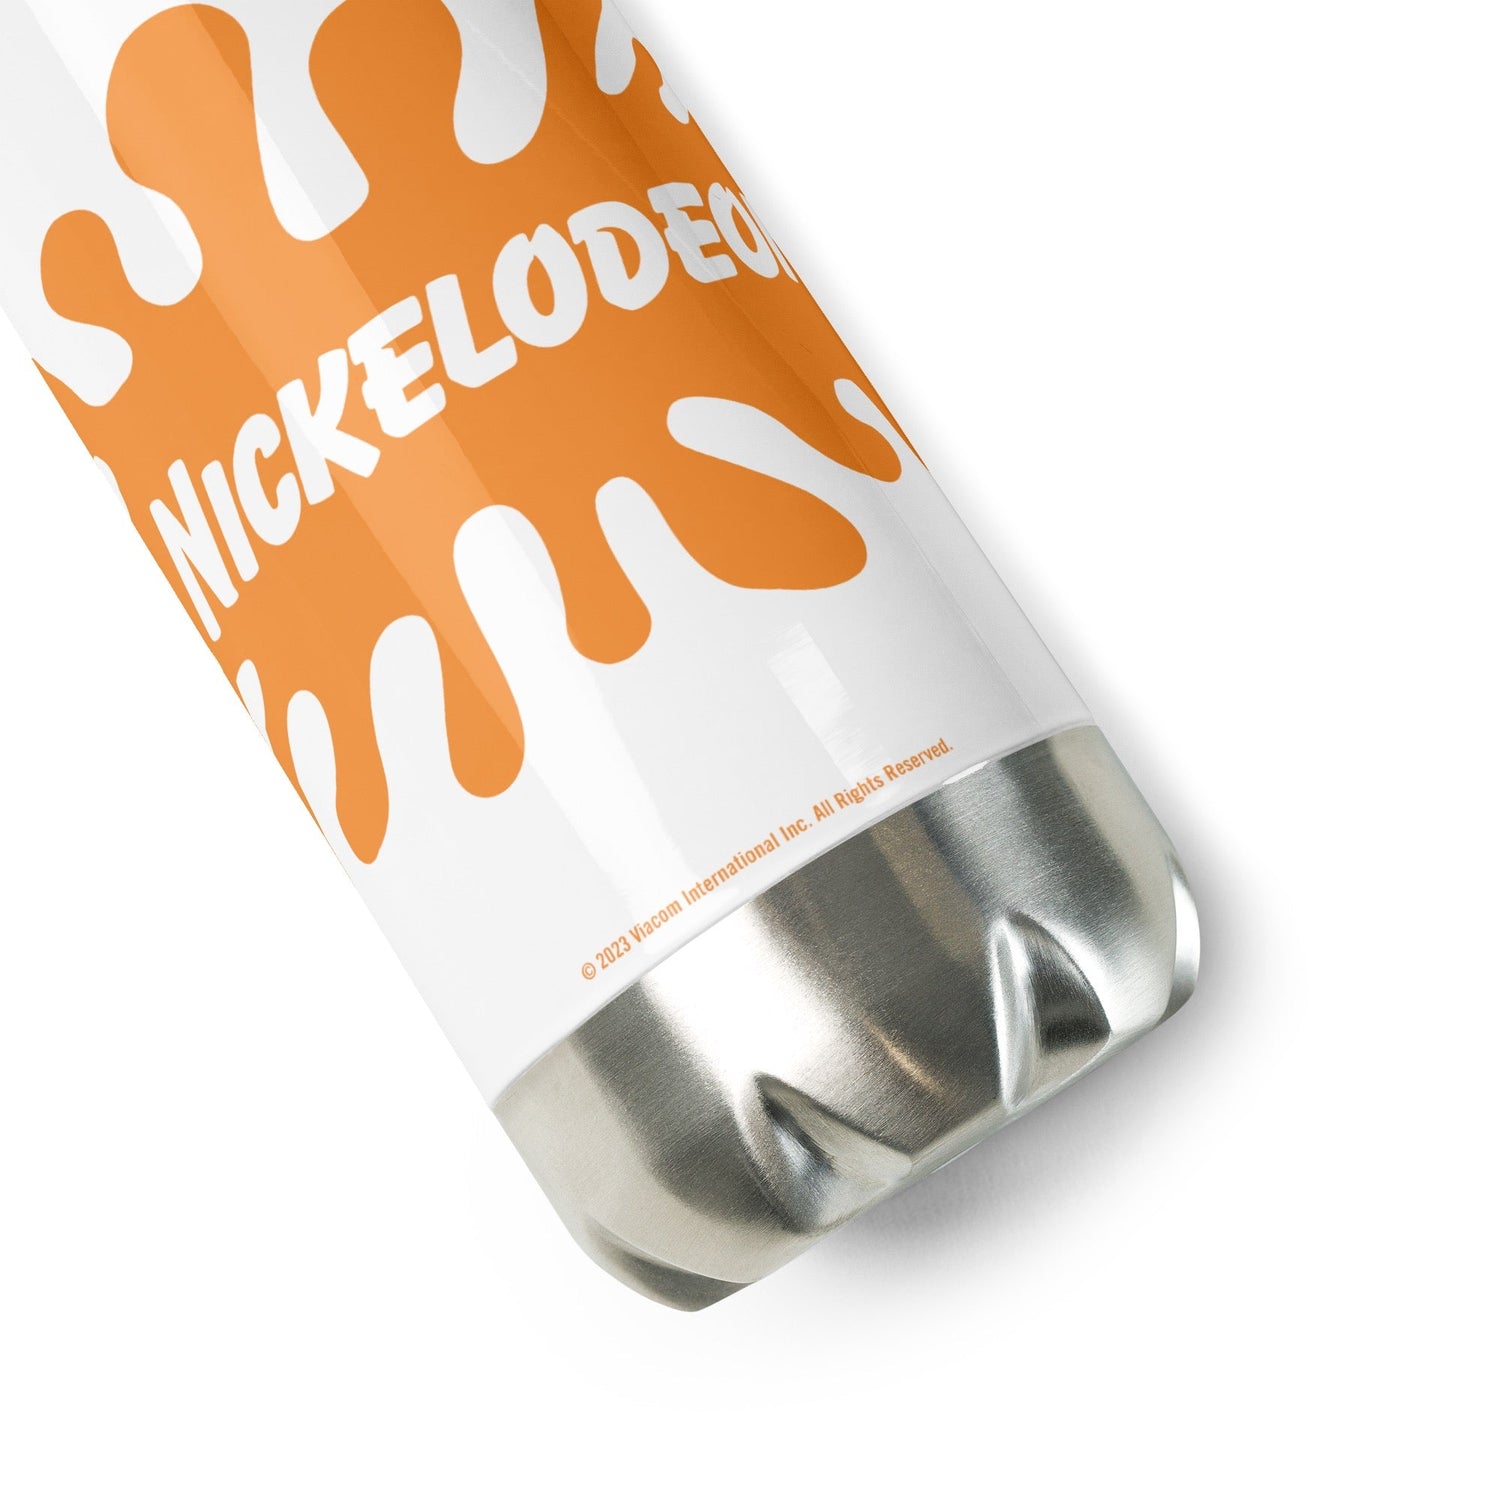 Retro Nickelodeon Stainless Steel Water Bottle - Paramount Shop